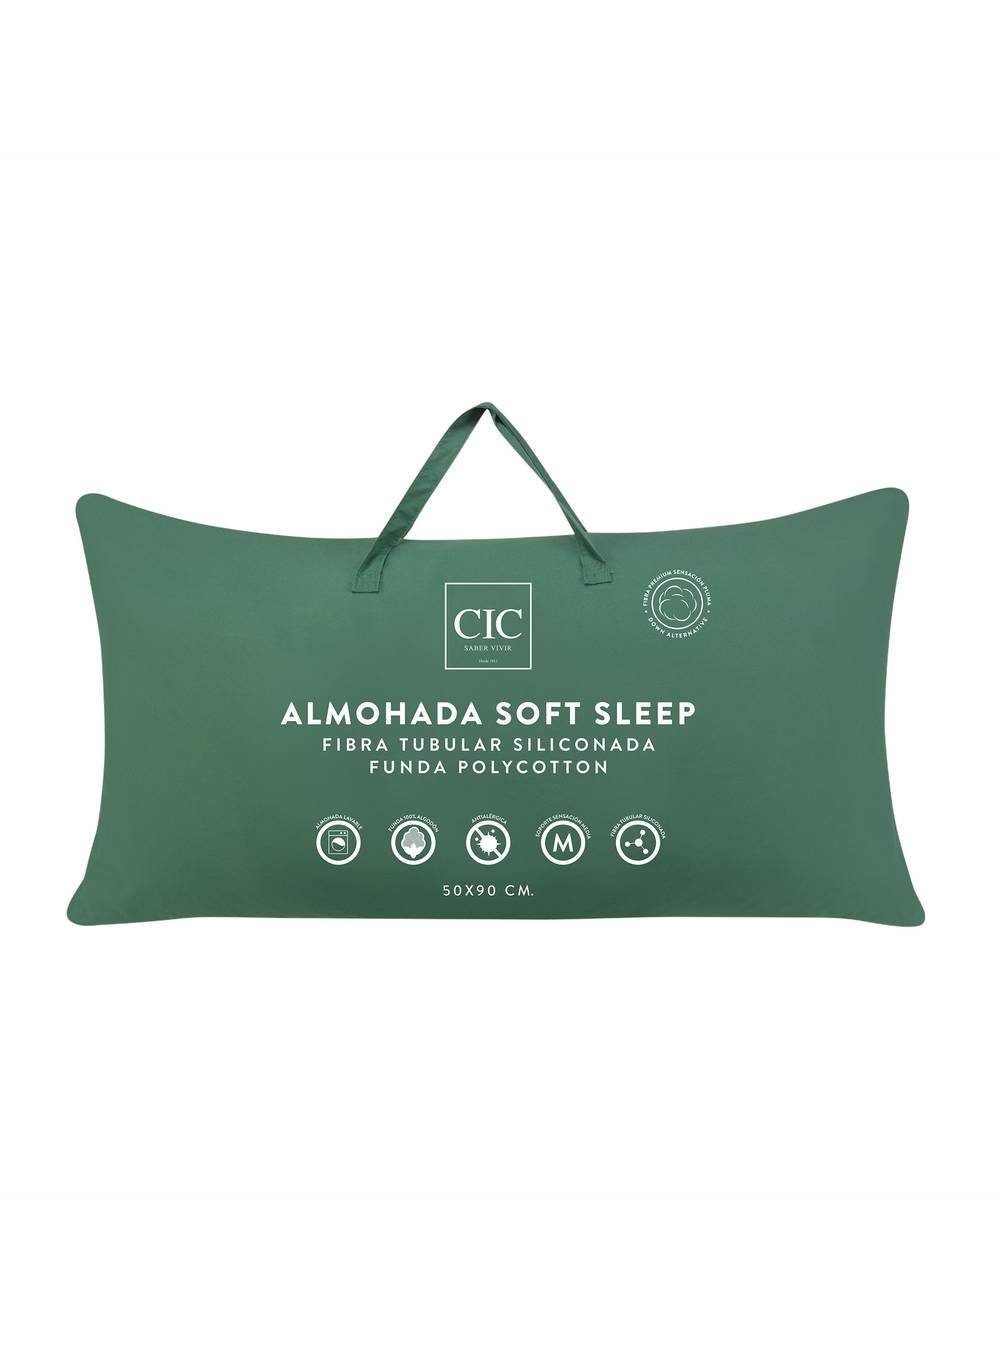 Cic almohada soft sleep (50 x 90 cm)